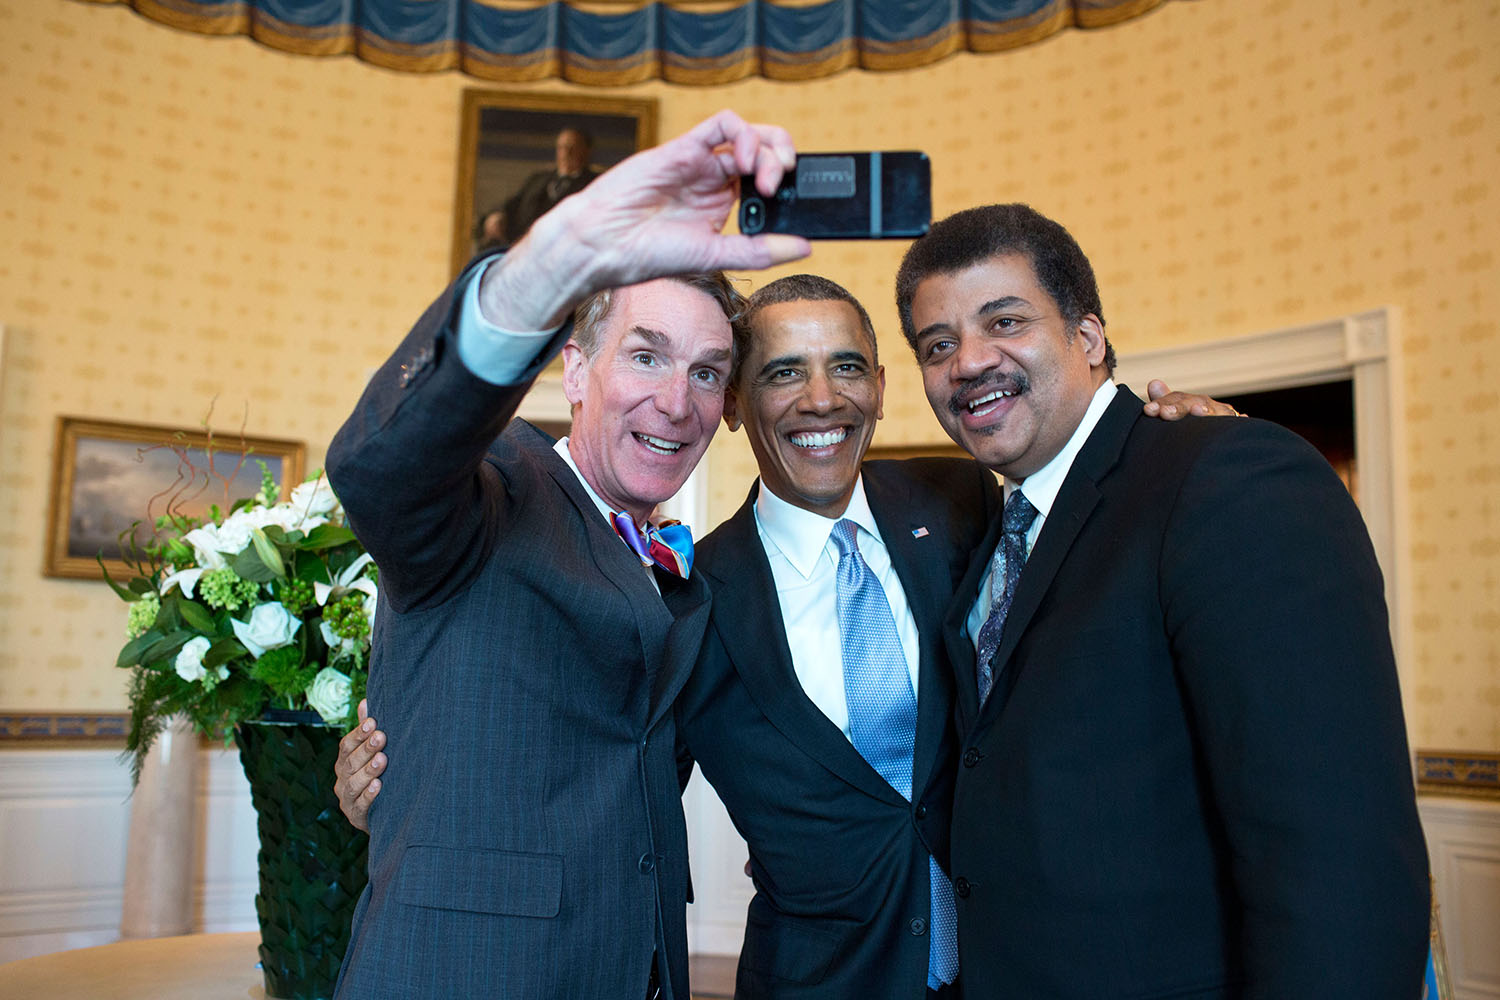 Bill_Nye,_Barack_Obama_and_Neil_deGrasse_Tyson_selfie_2014 - Wikipedia